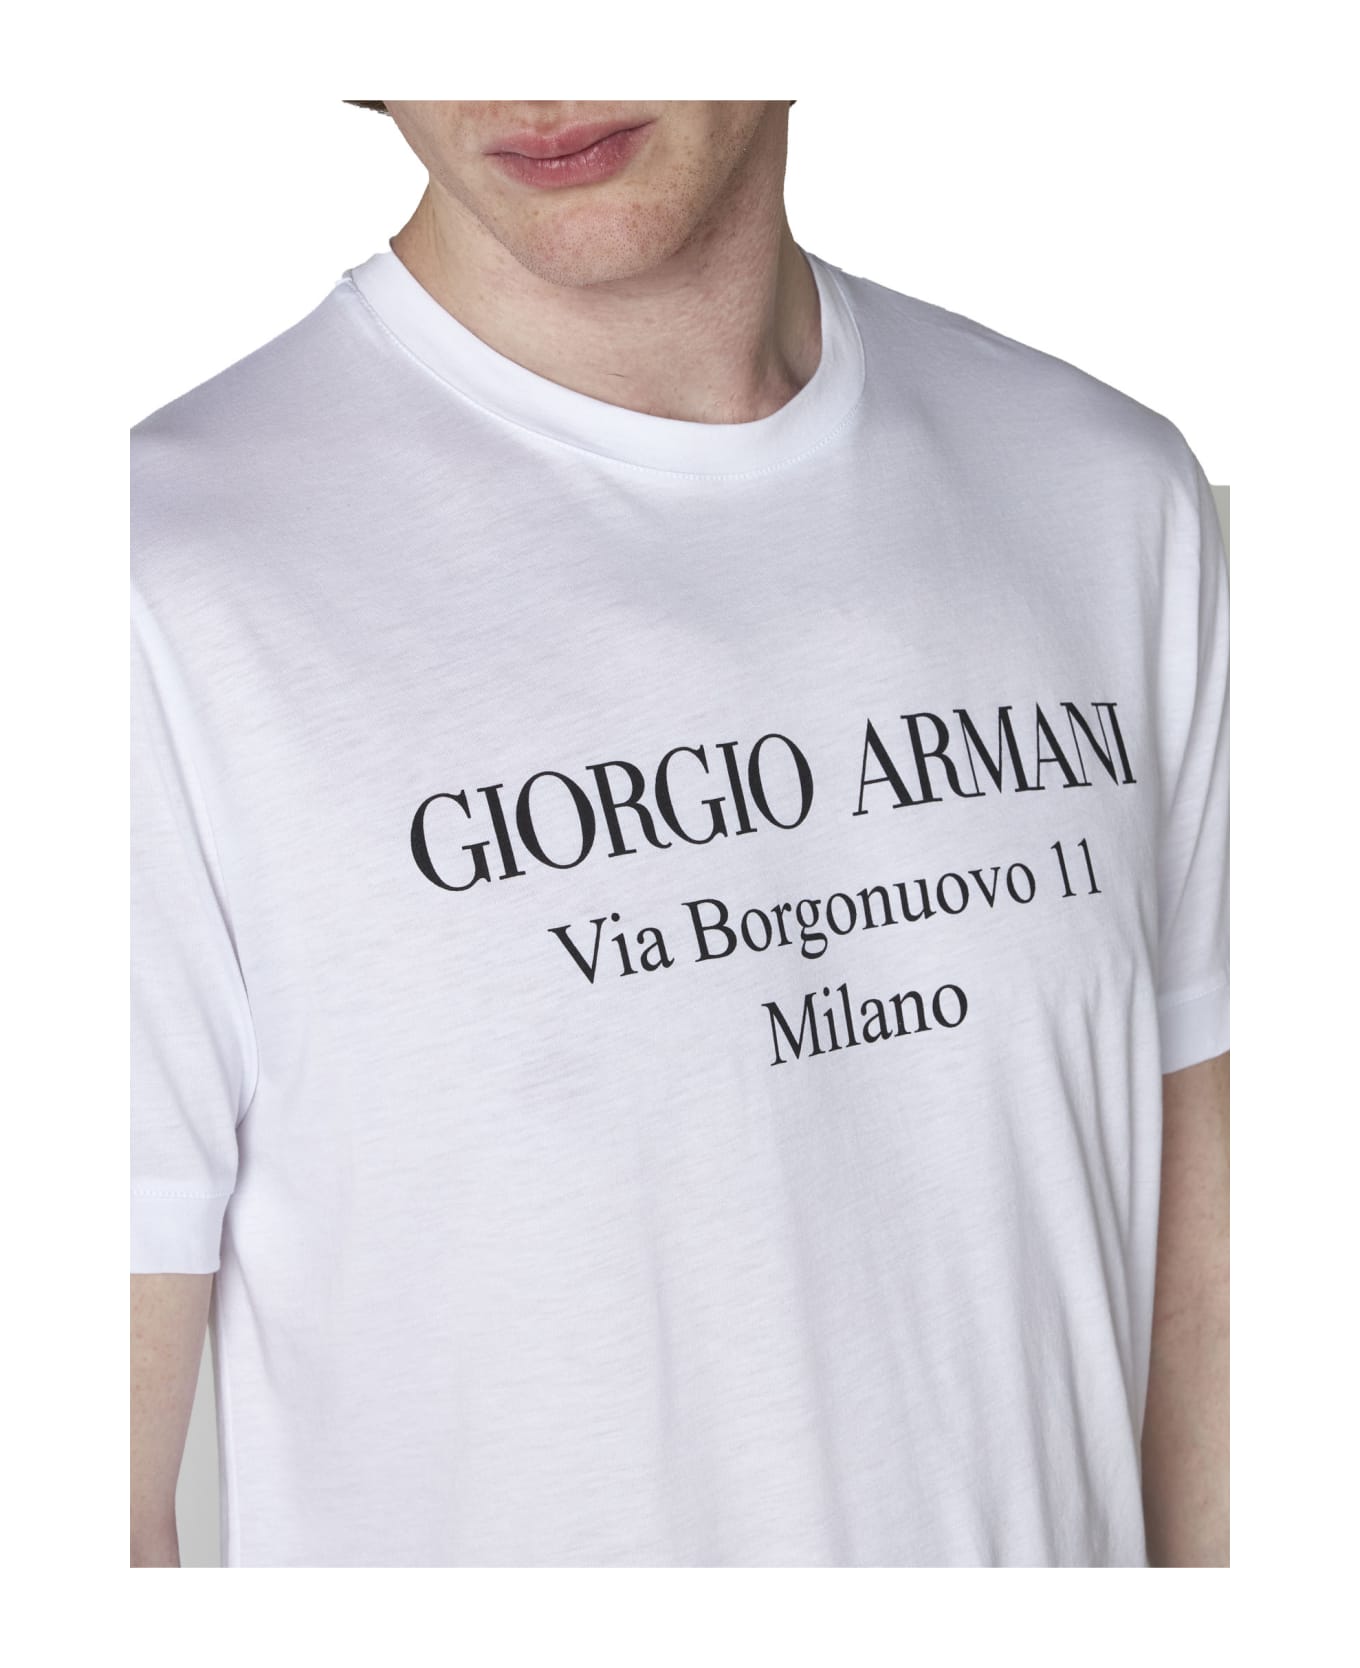 Giorgio Armani til T-Shirt - Bianco ottico